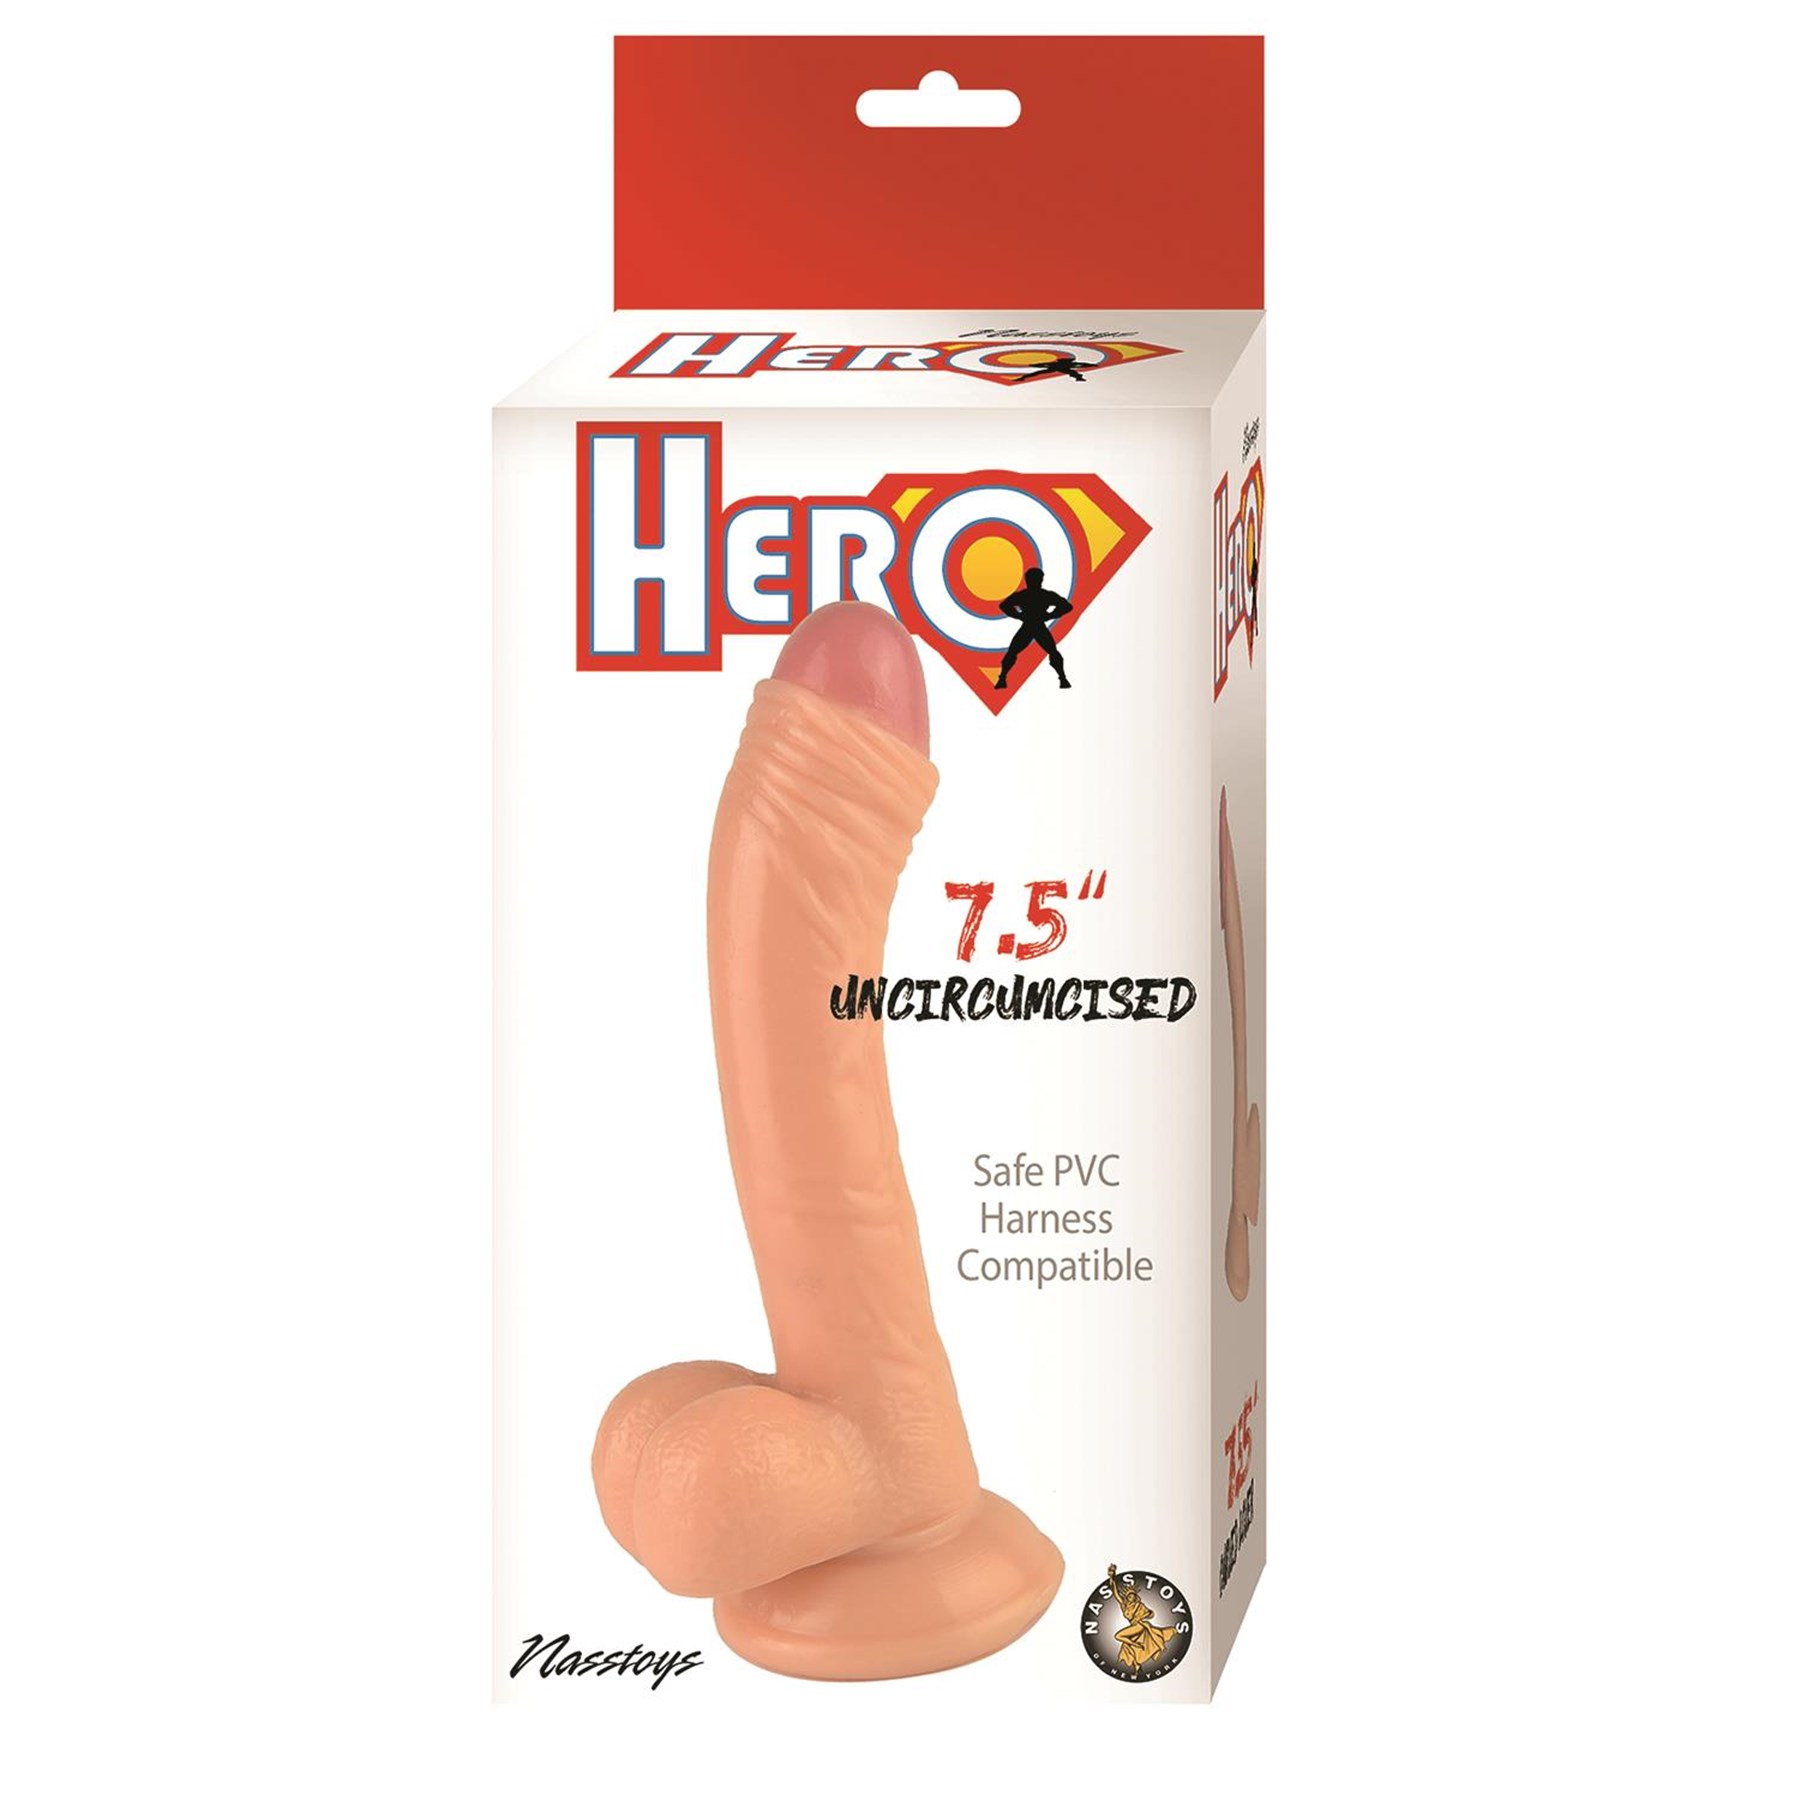 Hero 7.5 Inch Uncircumcised Dildo Packaging Shot